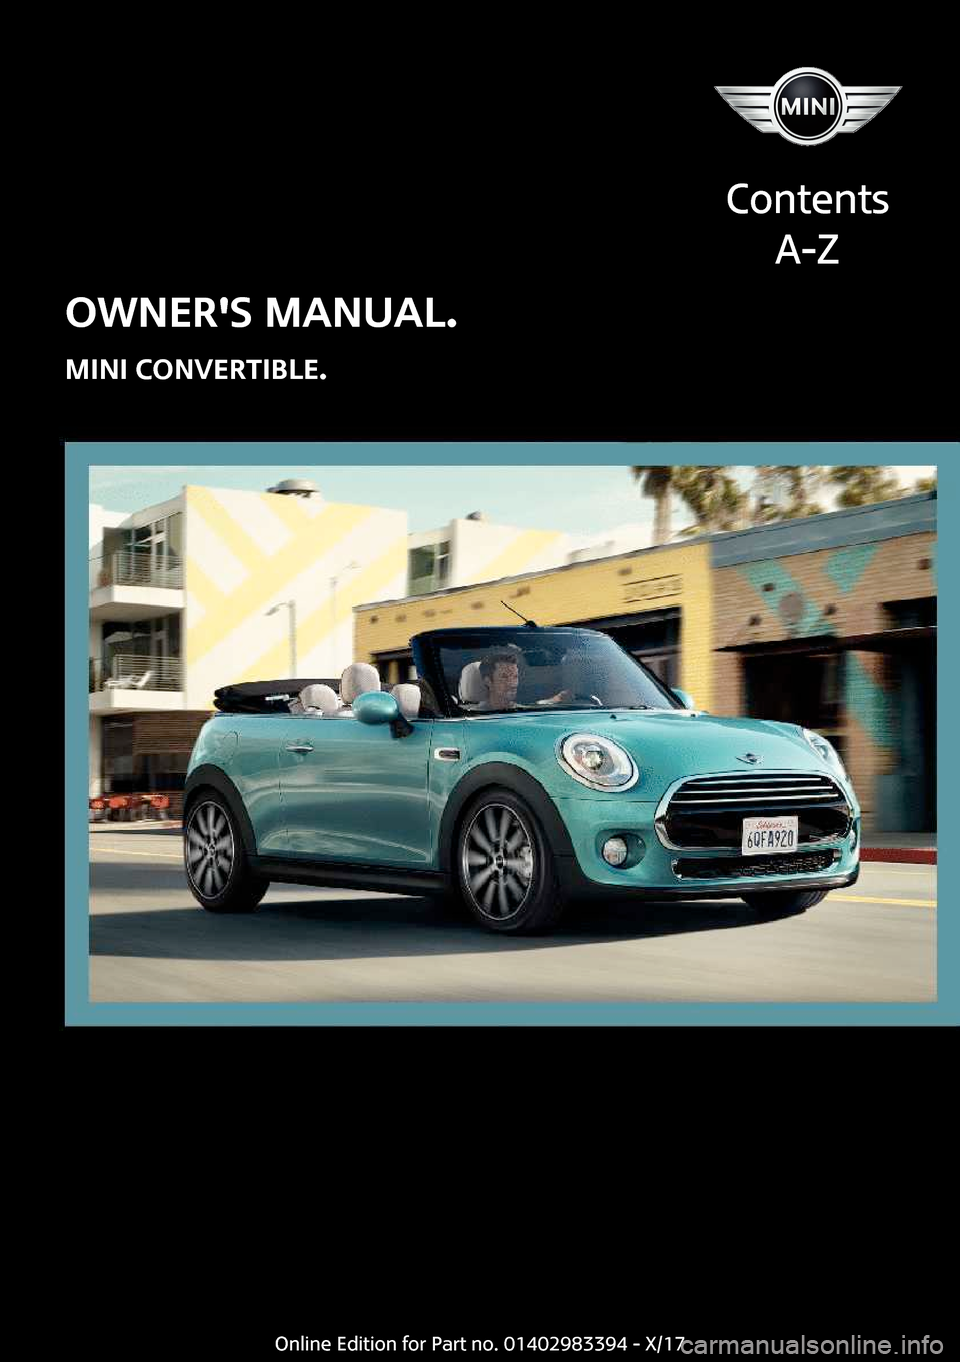 MINI Convertible 2018  Owners Manual �O�W�N�E�R��S��M�A�N�U�A�L�.
�M�I�N�I��C�O�N�V�E�R�T�I�B�L�E�.
�C�o�n�t�e�n�t�s �A�-�Z�O�n�l�i�n�e� �E�d�i�t�i�o�n� �f�o�r� �P�a�r�t� �n�o�.� �0�1�4�0�2�9�8�3�3�9�4� �-� �X�/�1�7  